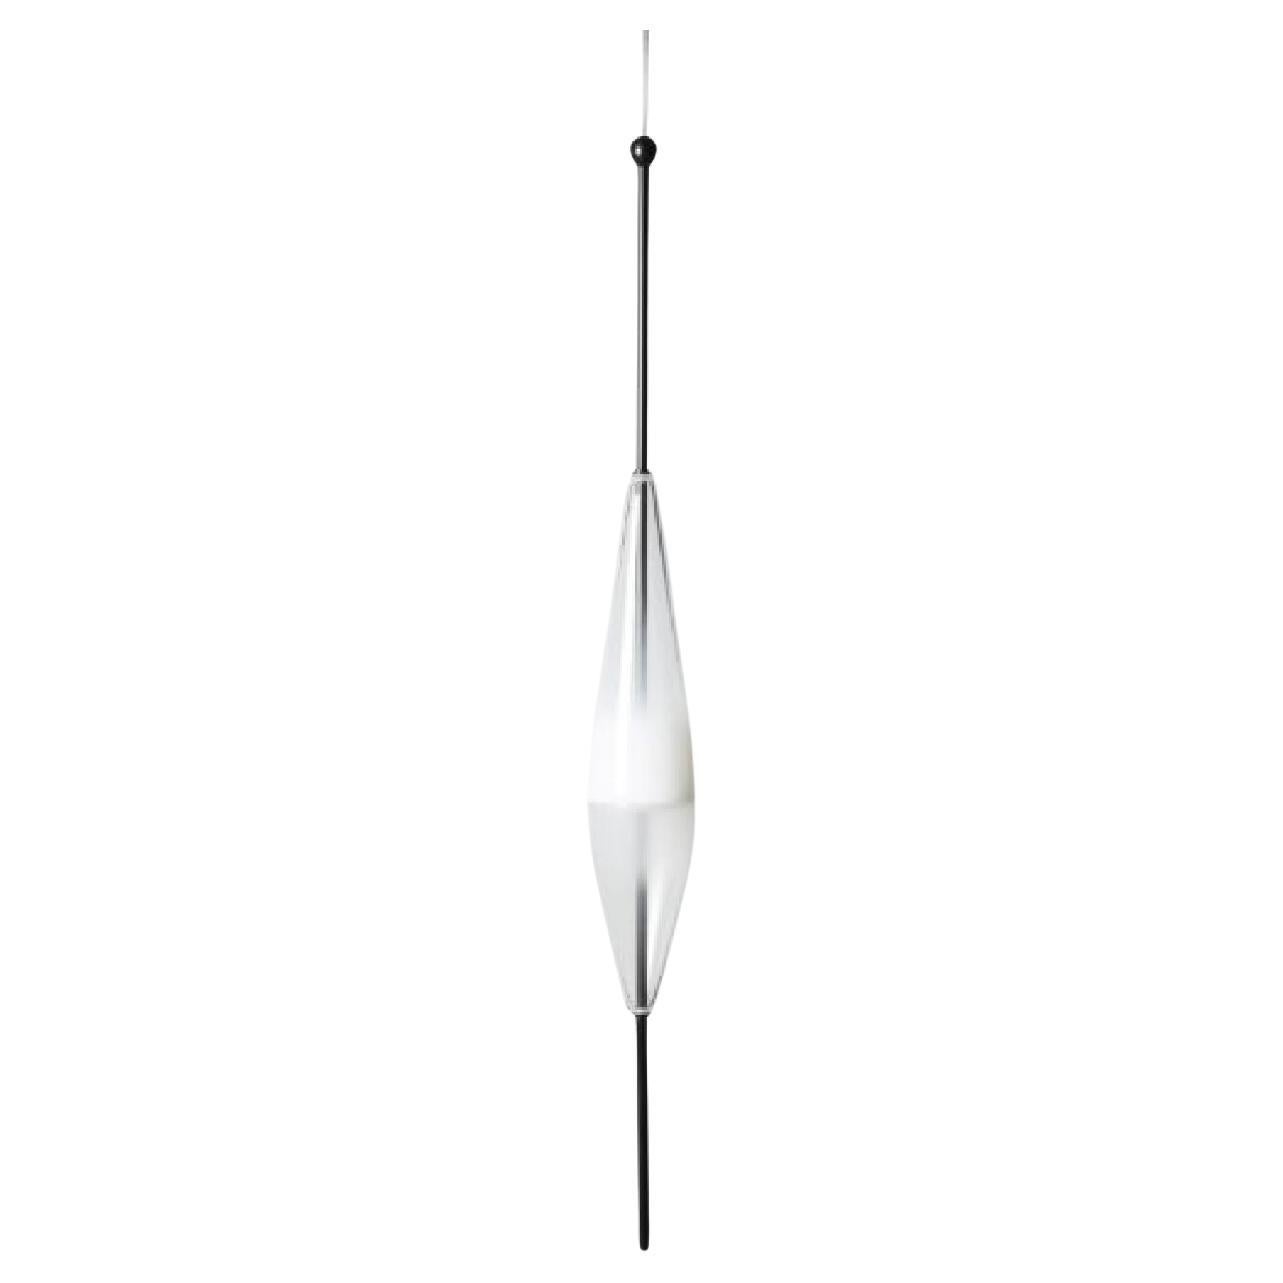 FLOW[T] S3 Pendant lamp in White by Nao Tamura for Wonderglass